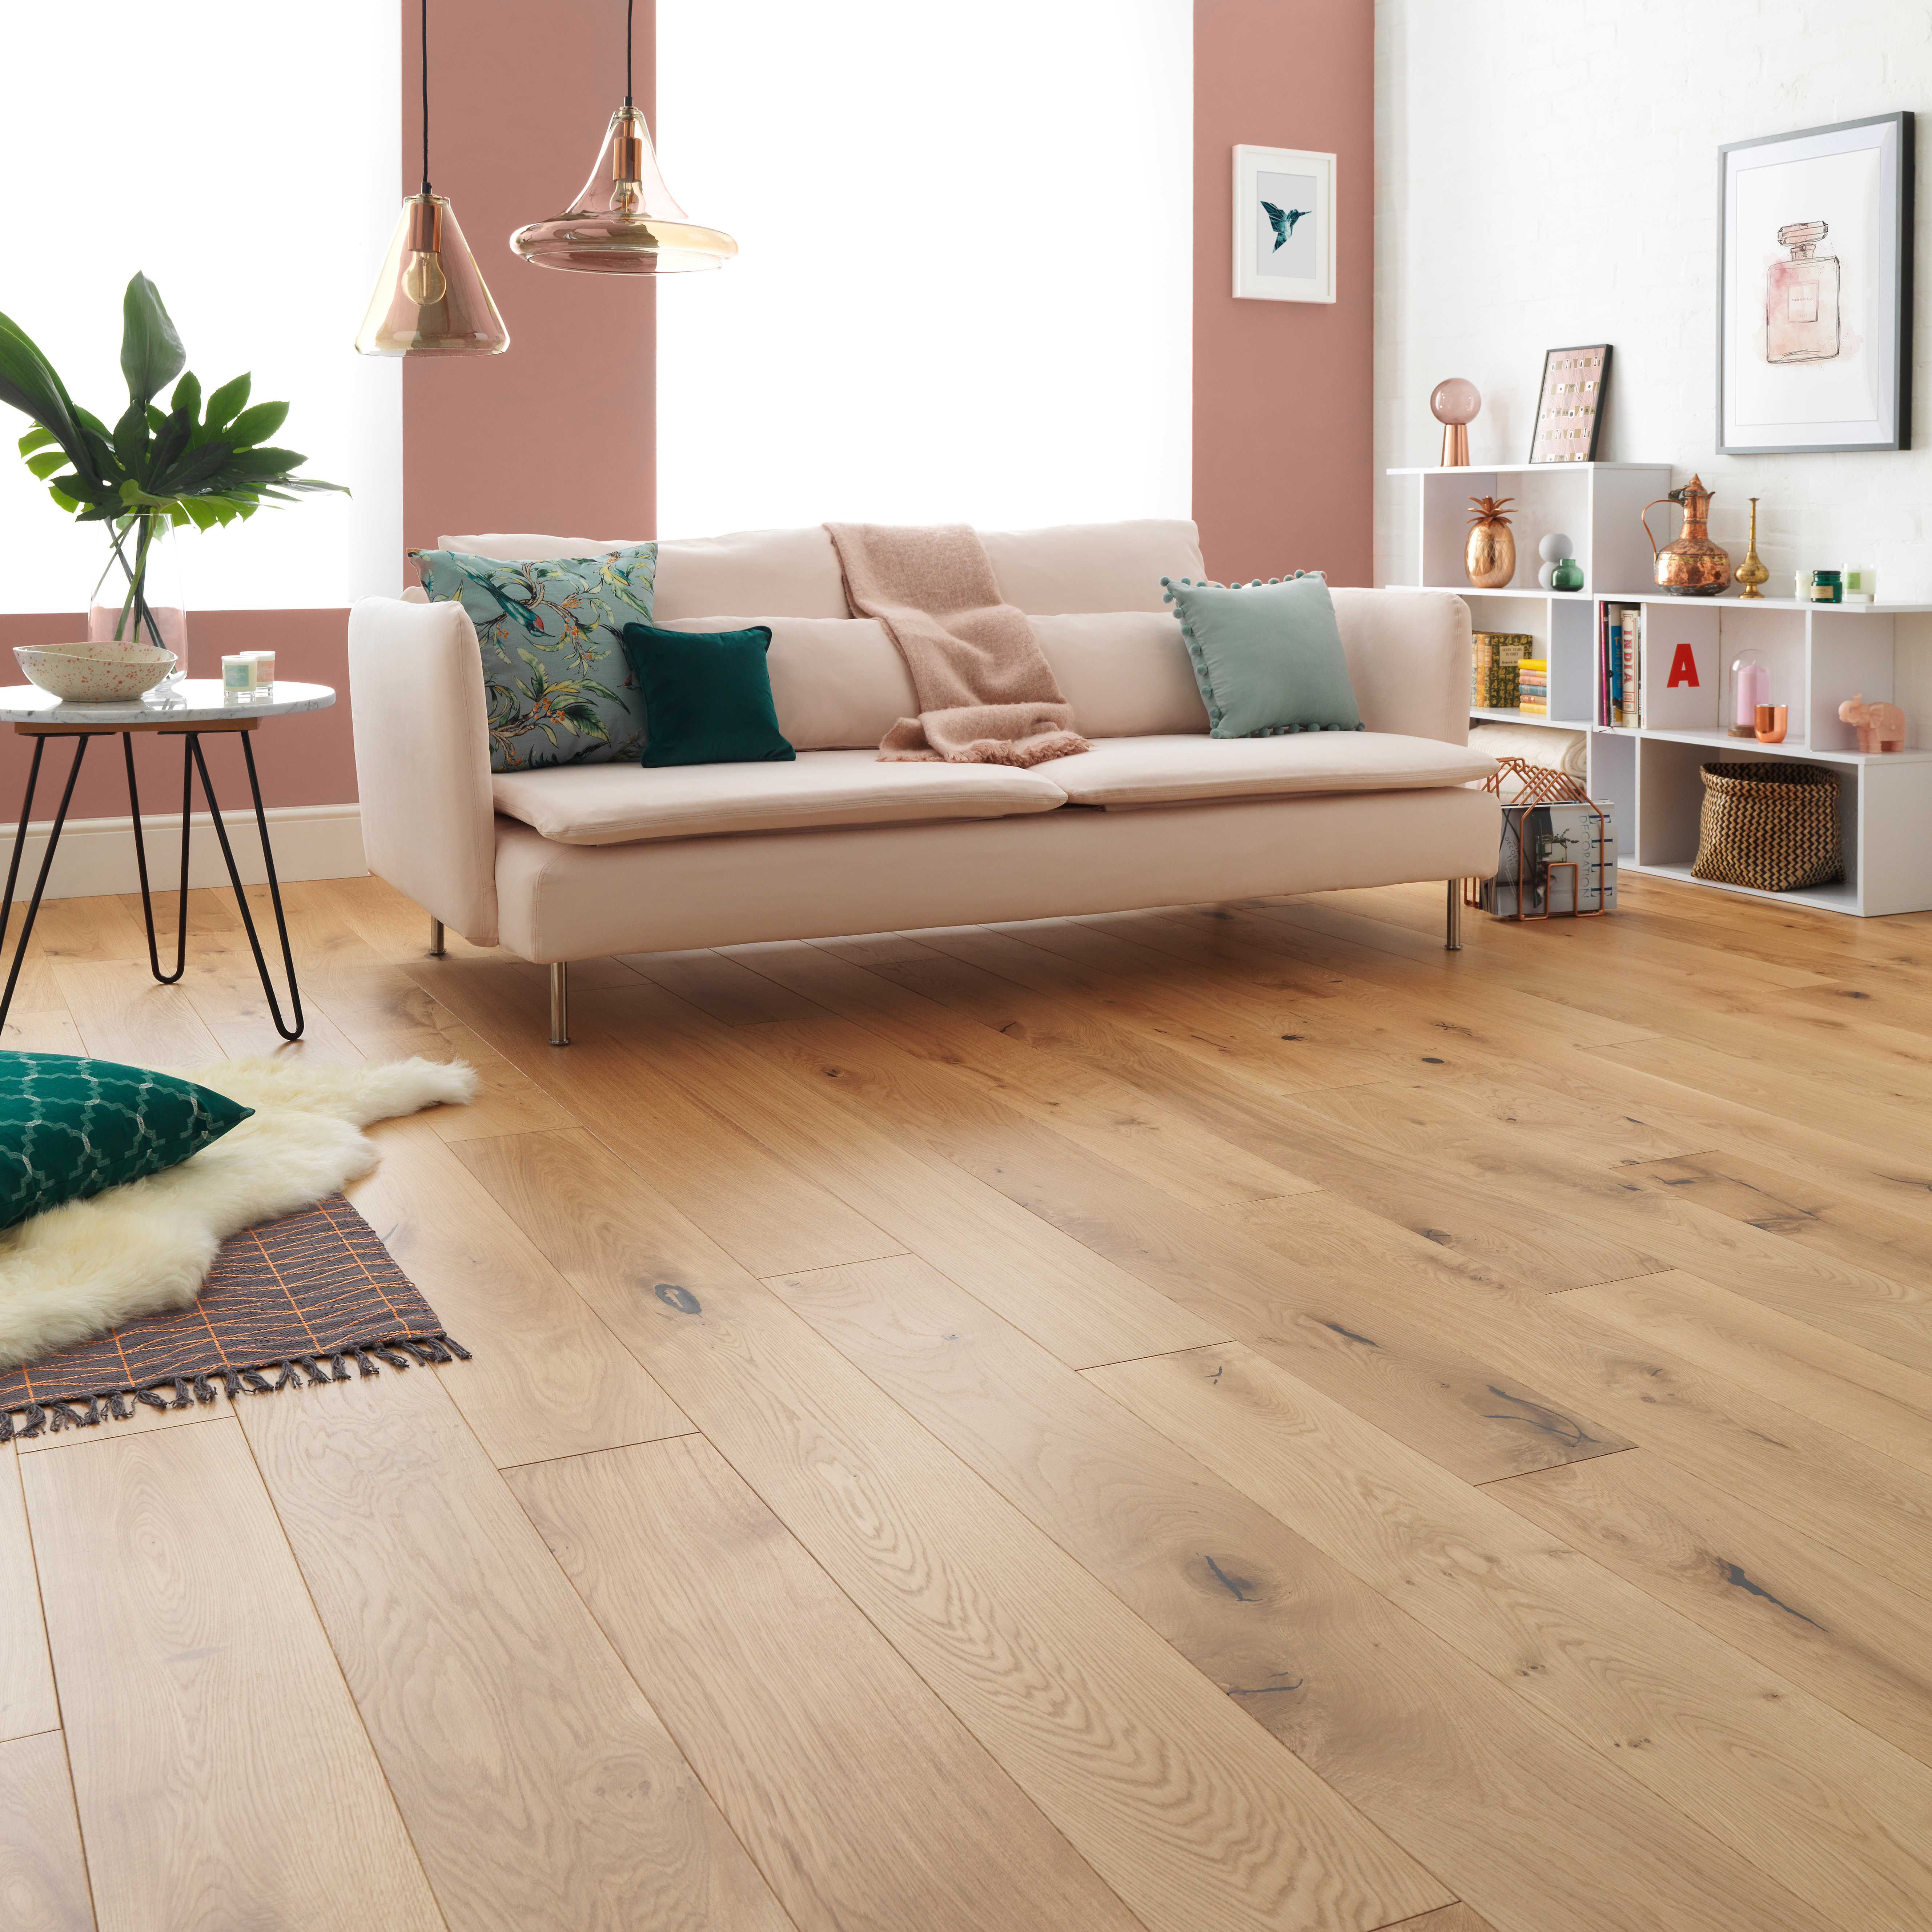 Wide Plank Flooring Trend Wood, Oak Plank Laminate Flooring